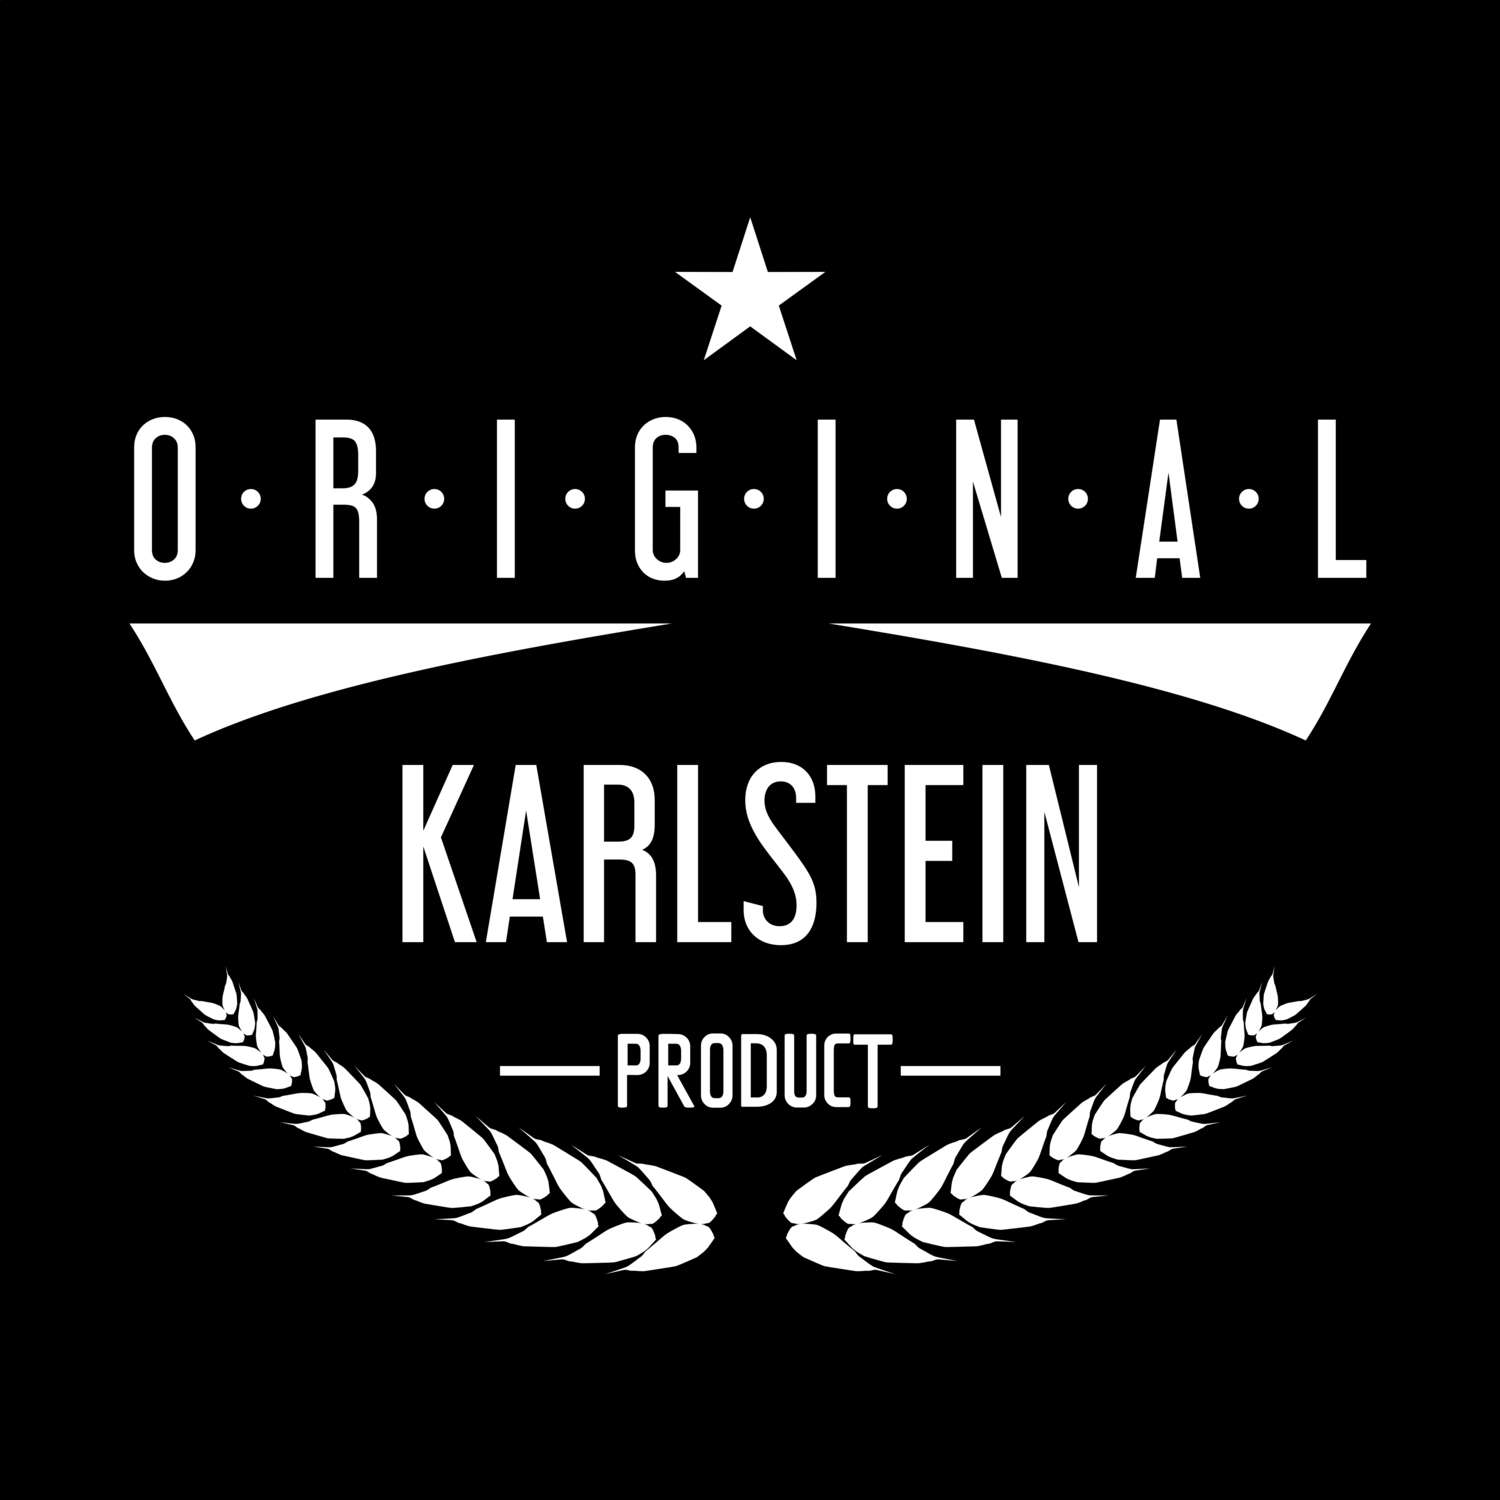 Karlstein T-Shirt »Original Product«